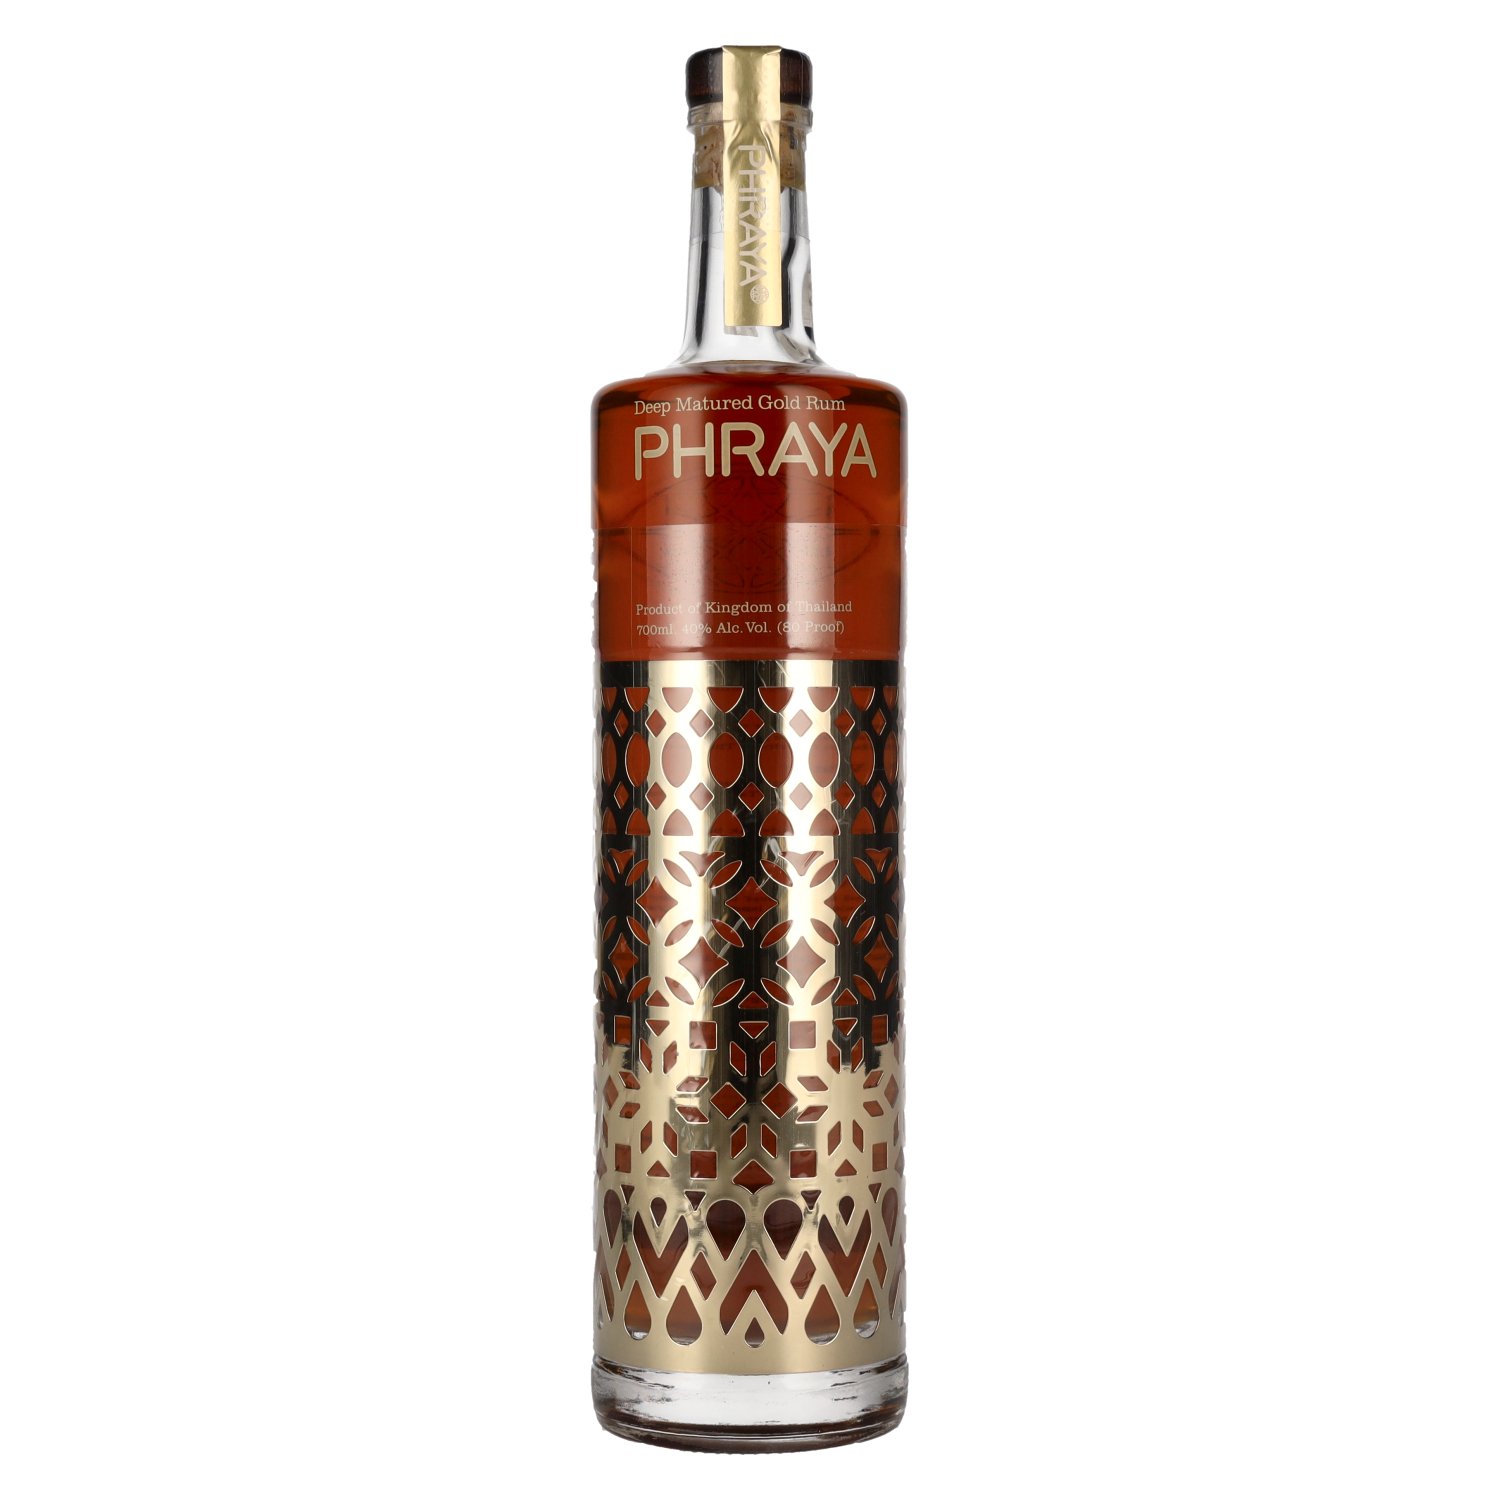 Phraya Deep Matured Gold rum 40% 0,7L